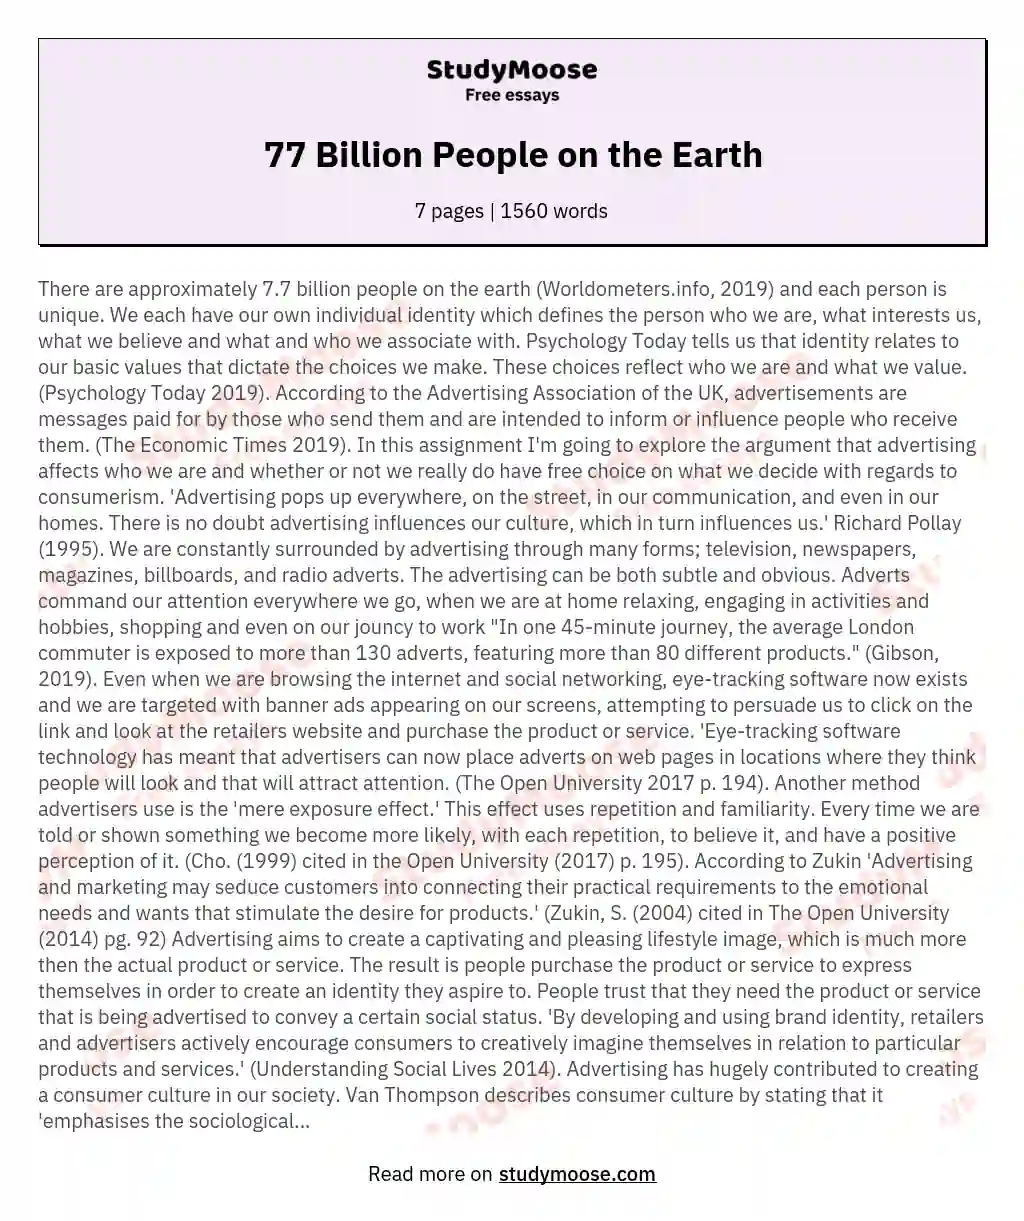 77 Billion People on the Earth